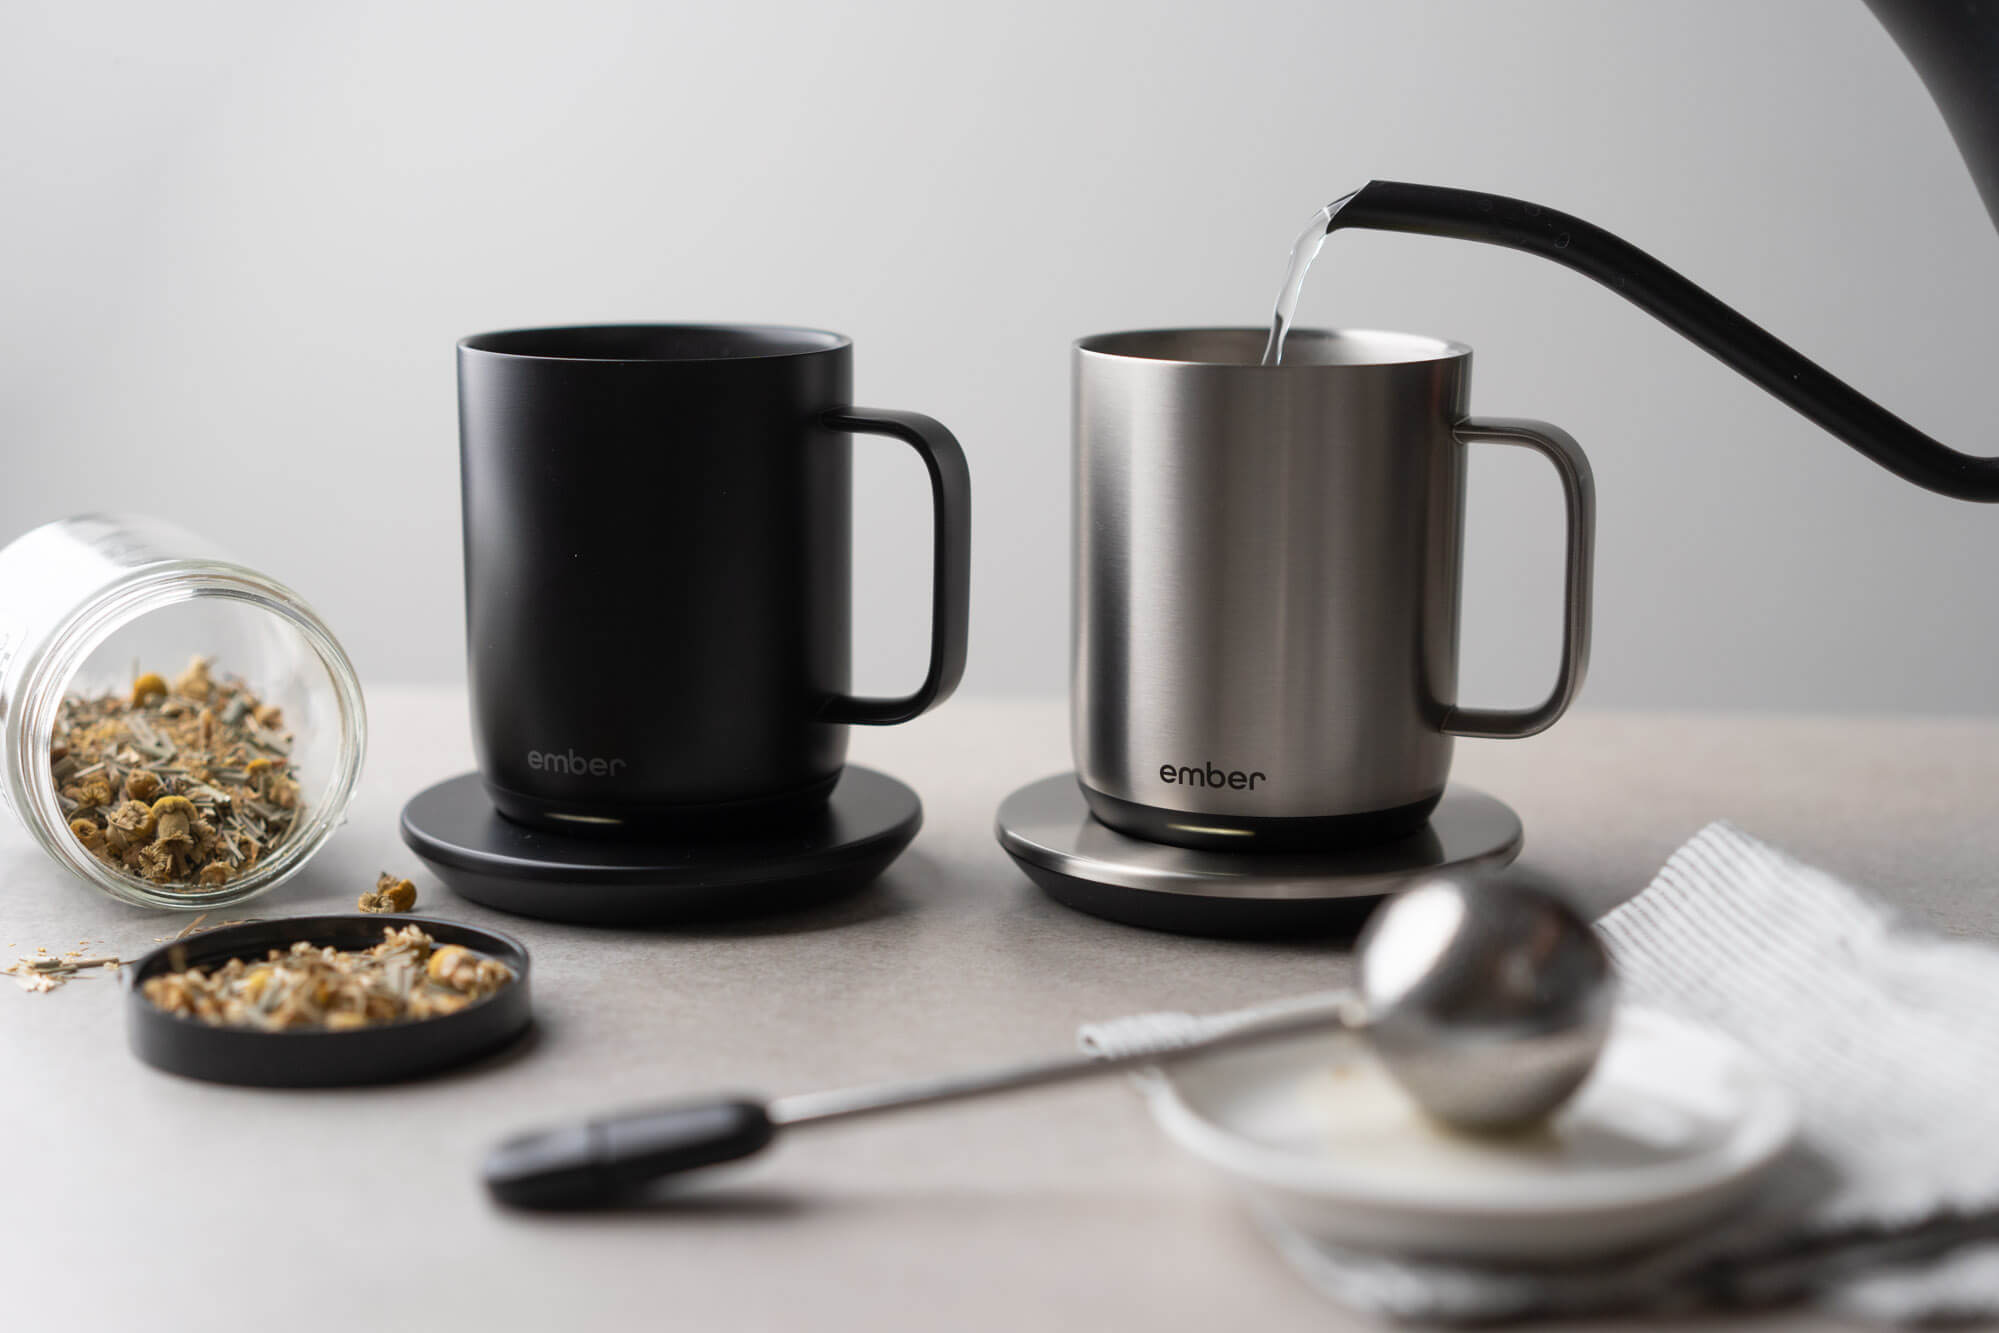 Ember Coffee Mug Review: Our Honest Opinion of the Ember Mug